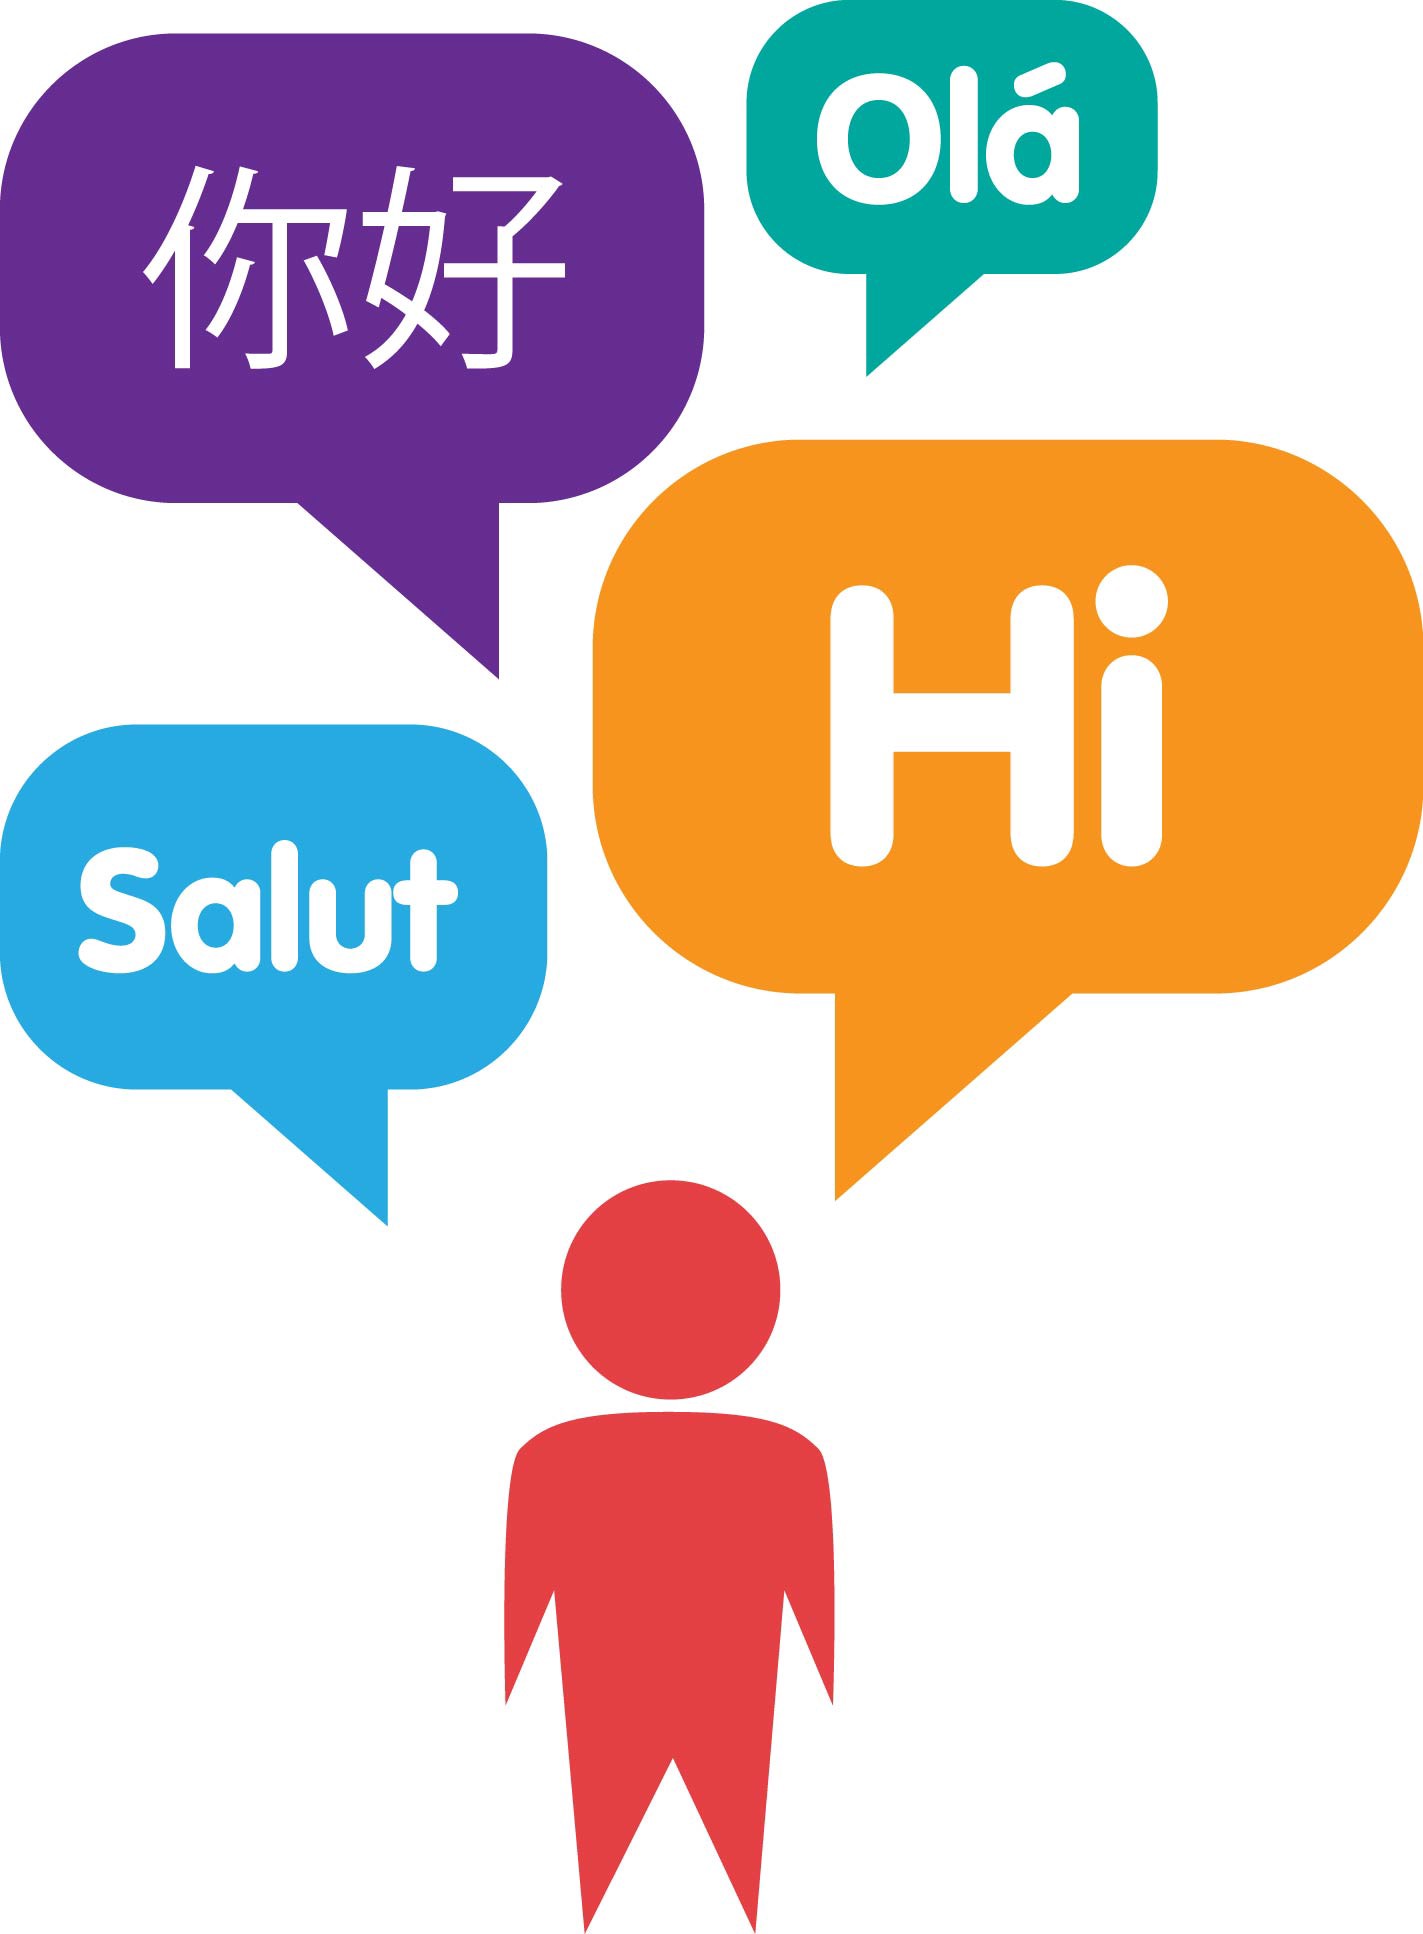 language clipart multilingual